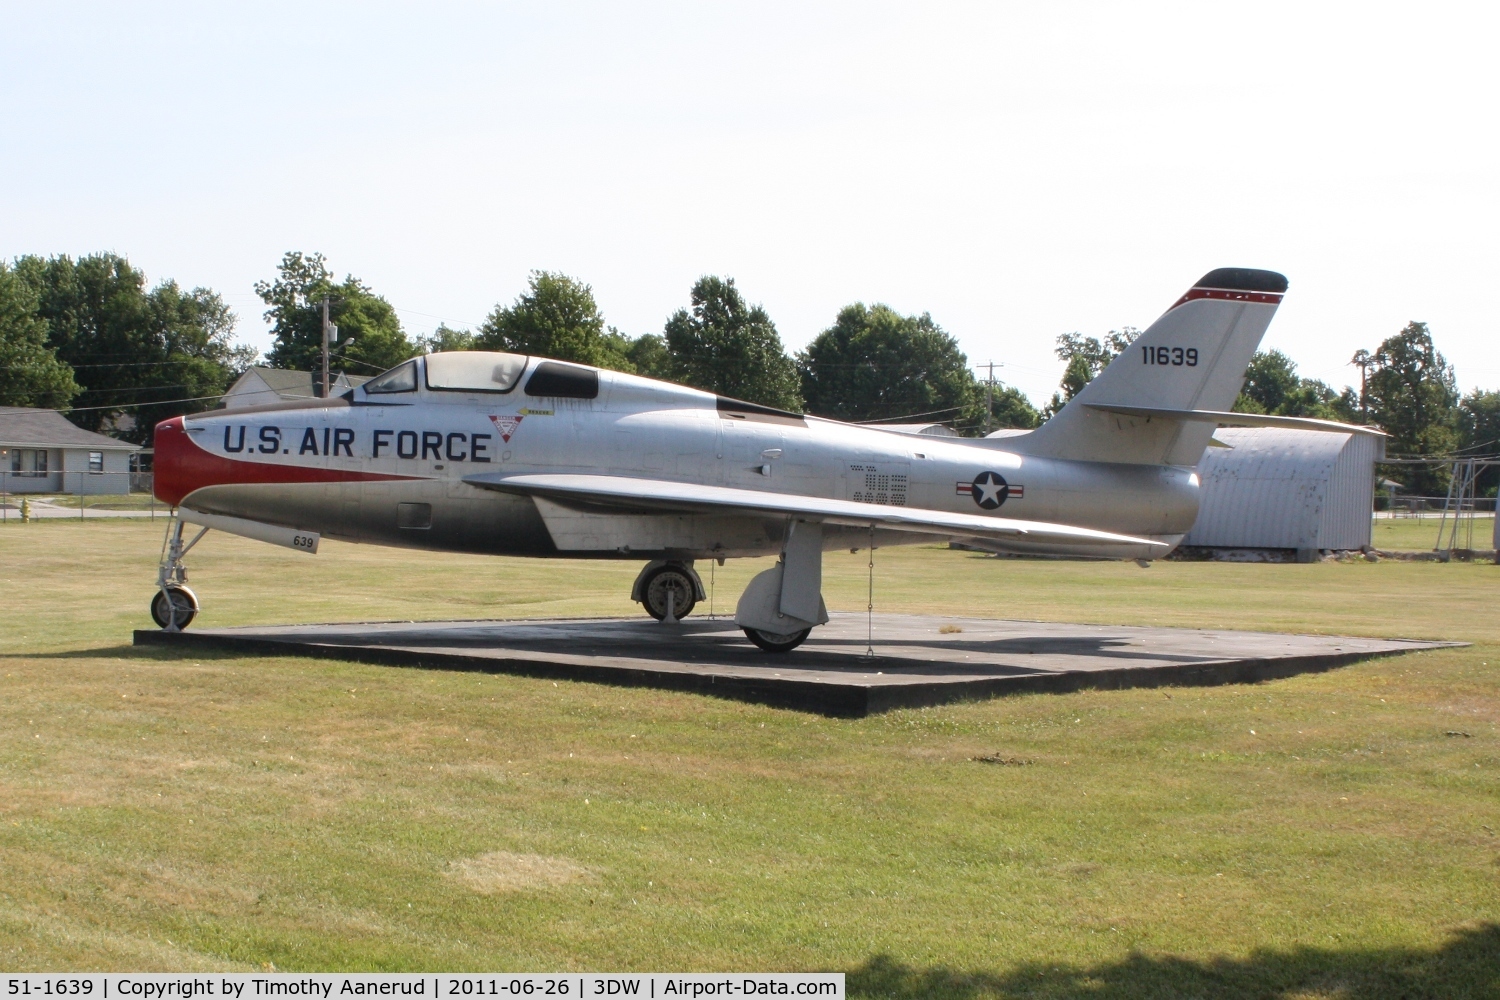 51-1639, 1954 Republic F-84F Thunderstreak C/N Not found 51-1639, 1954 Republic F-84F-25-RE, c/n: 51-1639